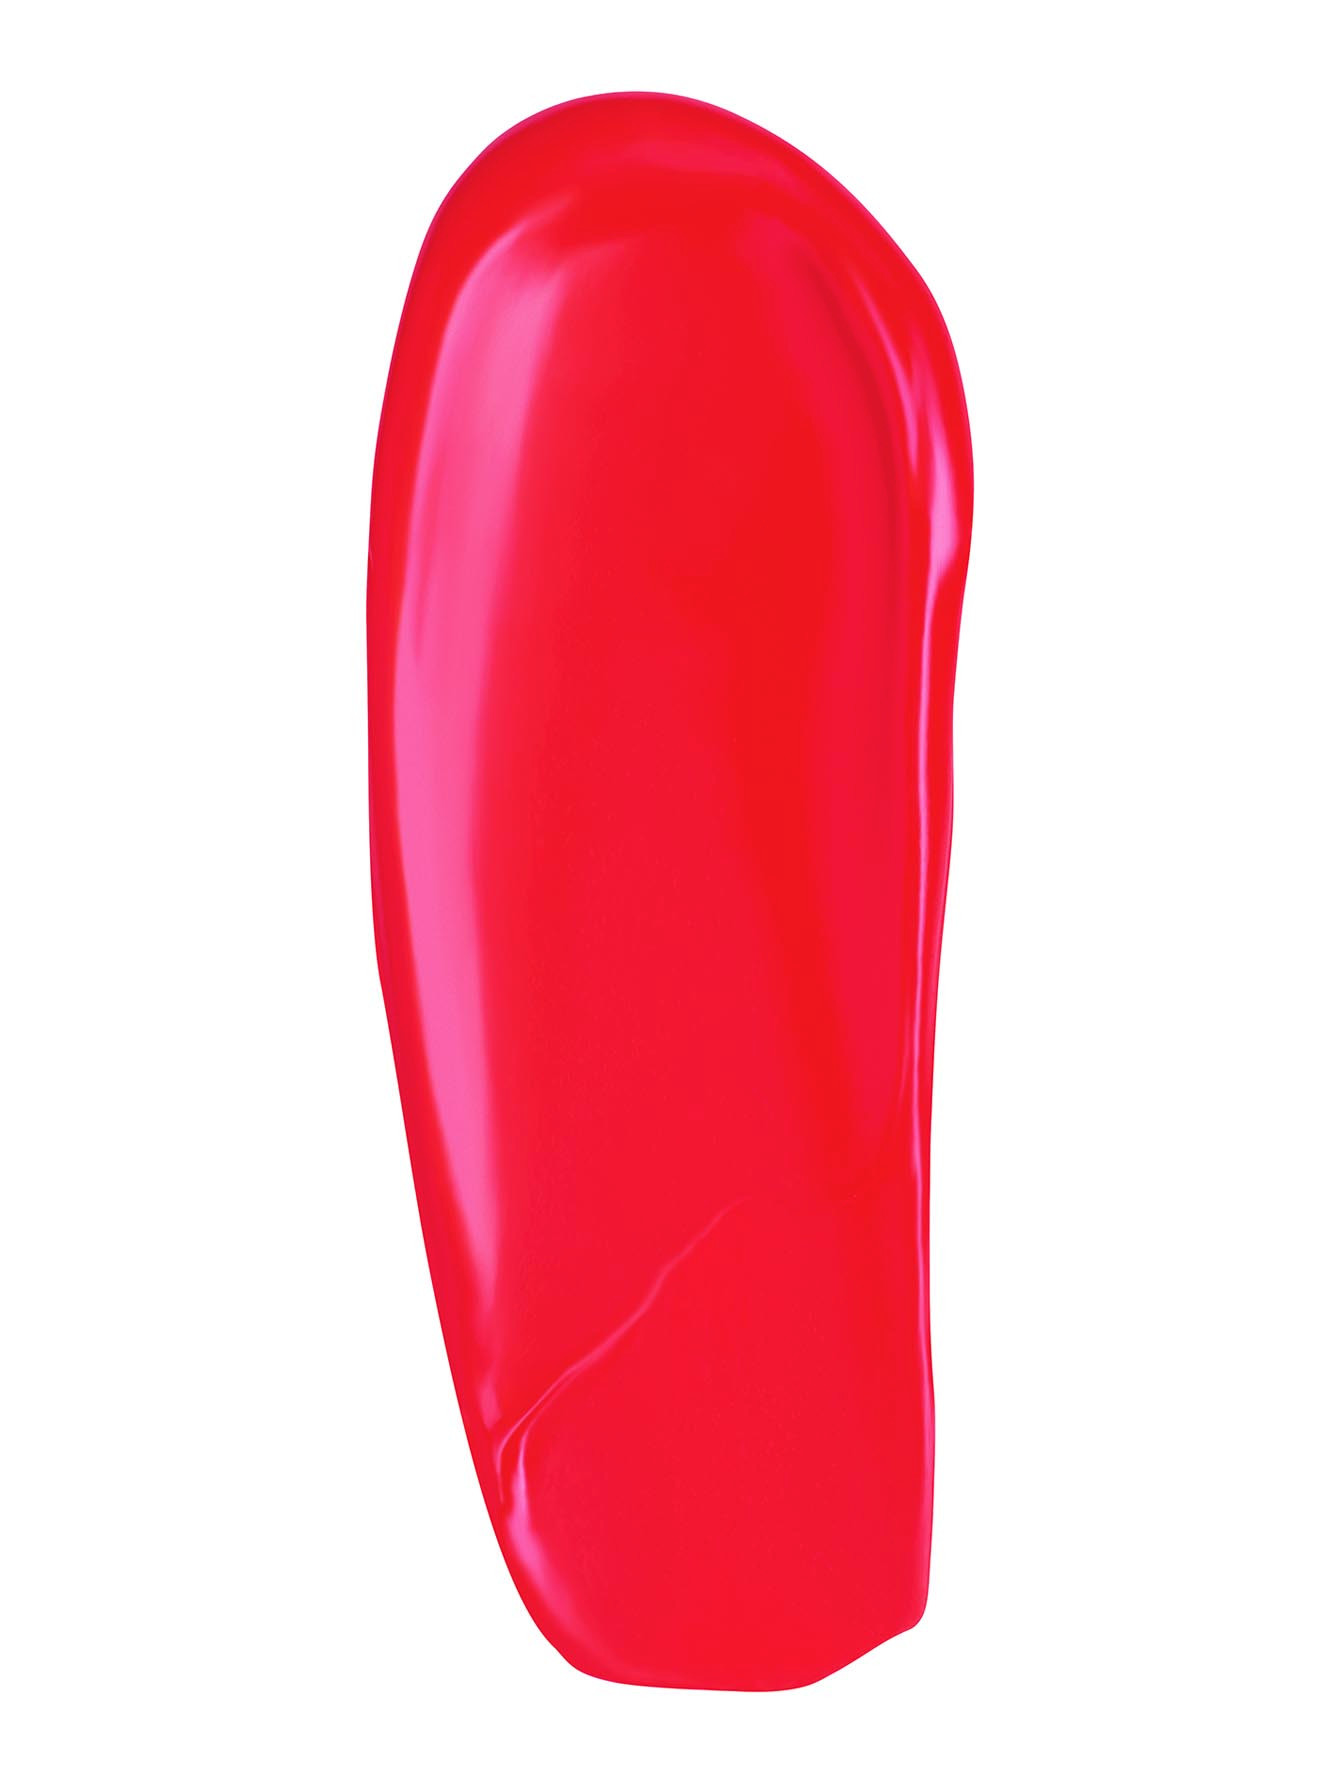 Матовая губная помада Lip-Expert Matte Liquid Lipstick, 11 Sweet Flamenco, 4 мл - Обтравка1